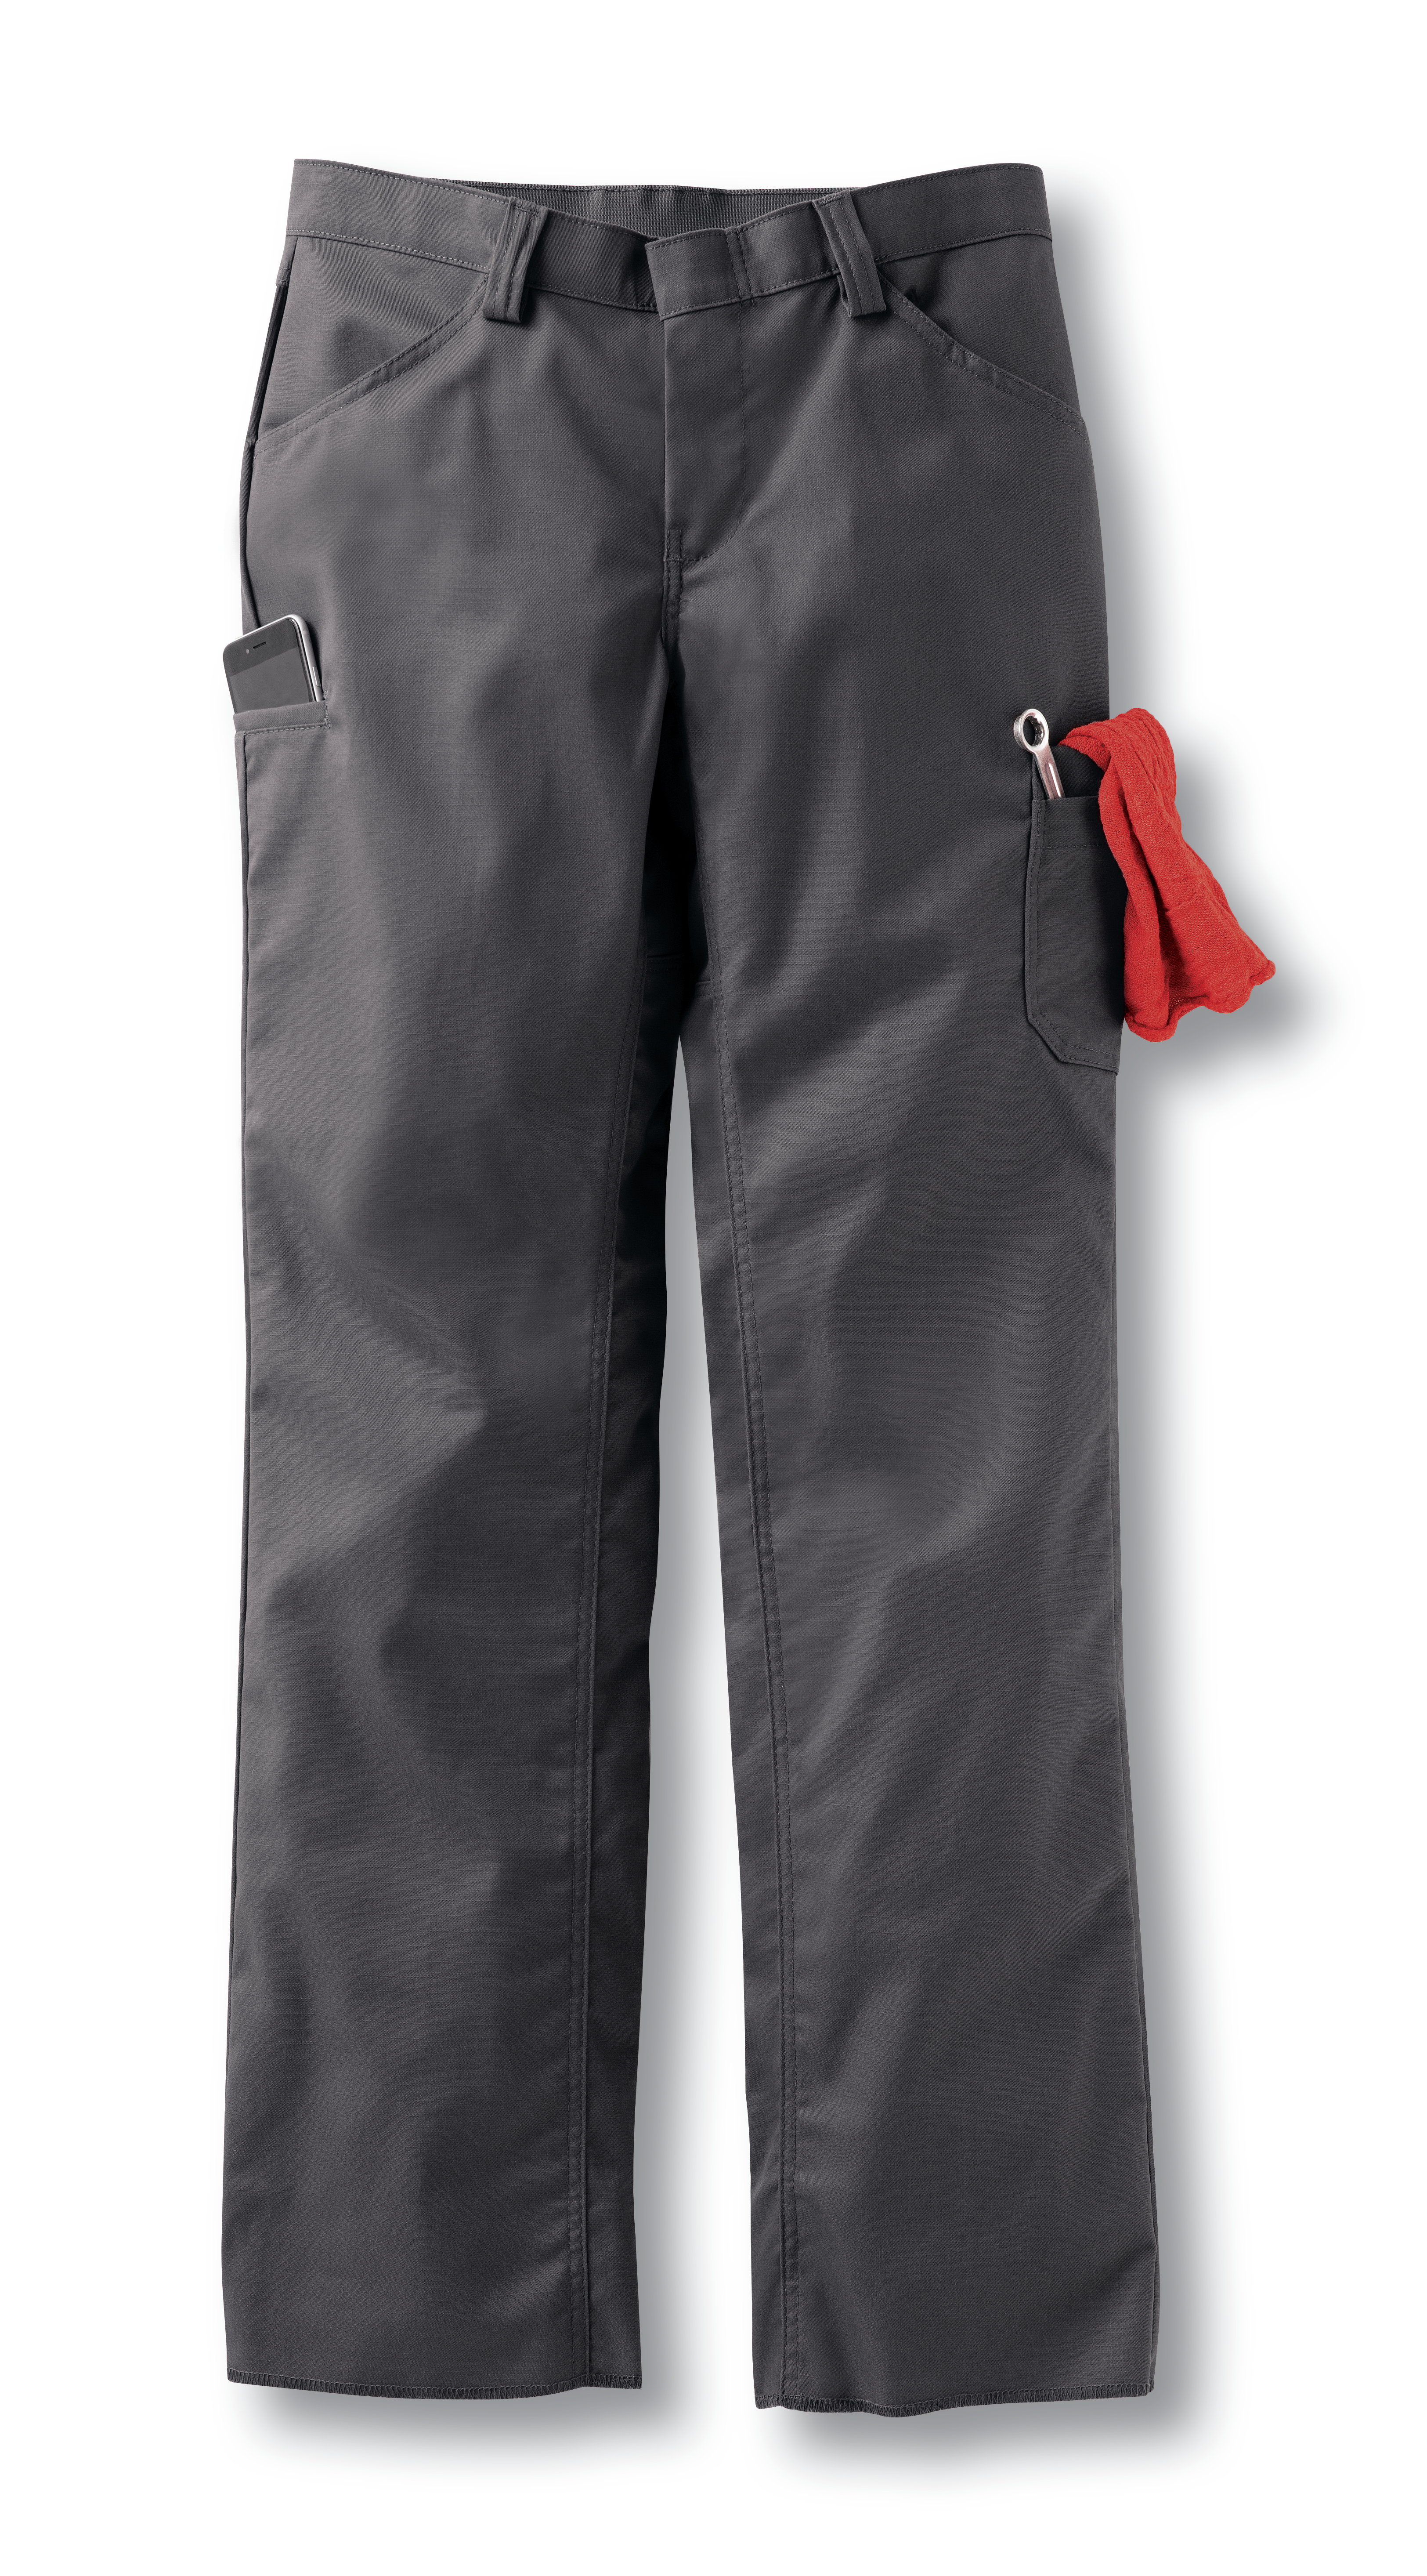 Stormpack Ladies' Size Large Windproof Microfleece Lined Pants, Gray -  Walmart.com